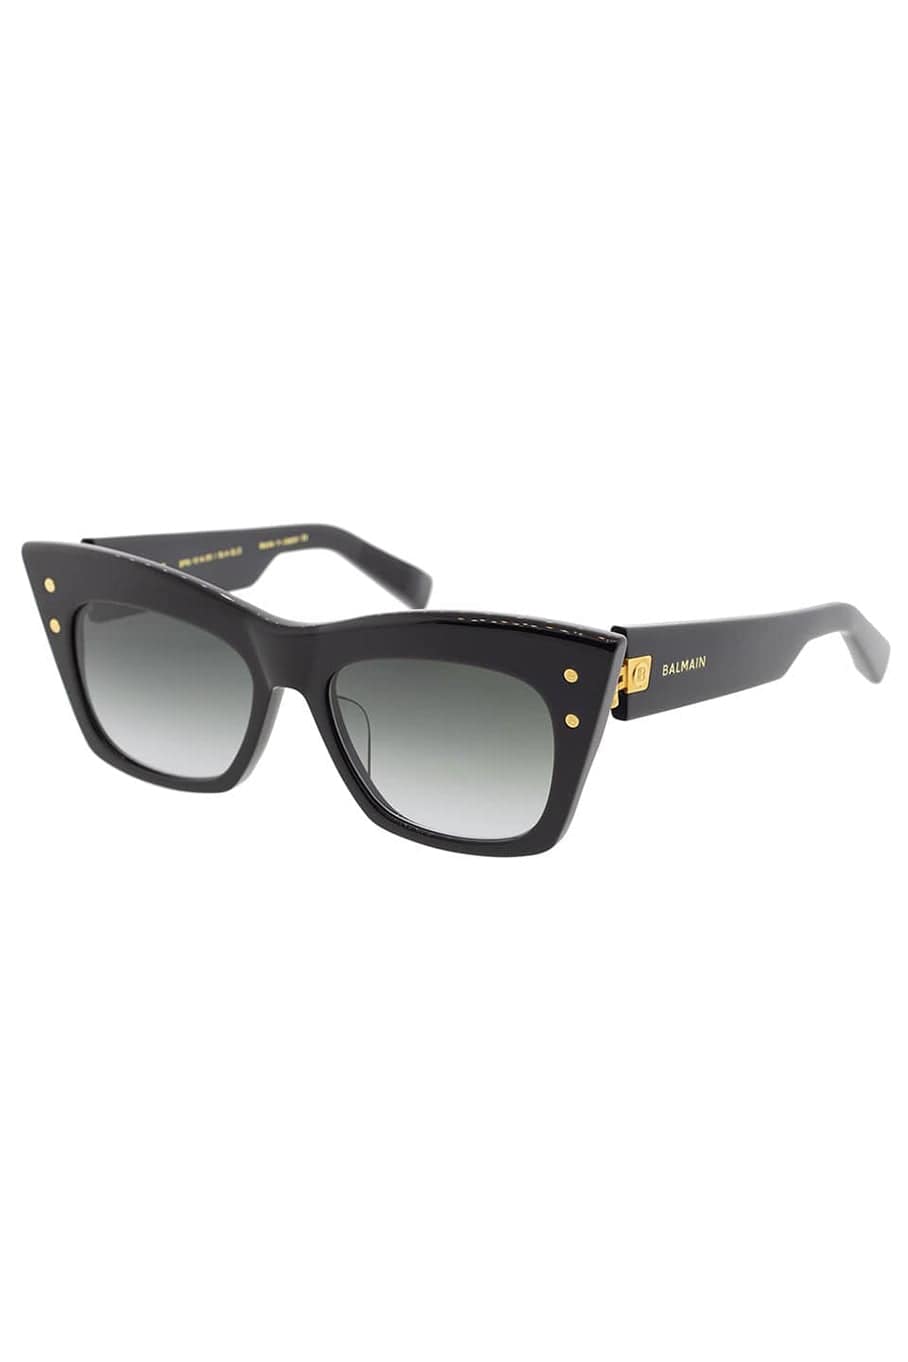 BALMAIN-Black and Gold B-II Sunglasses-BLK/GLD